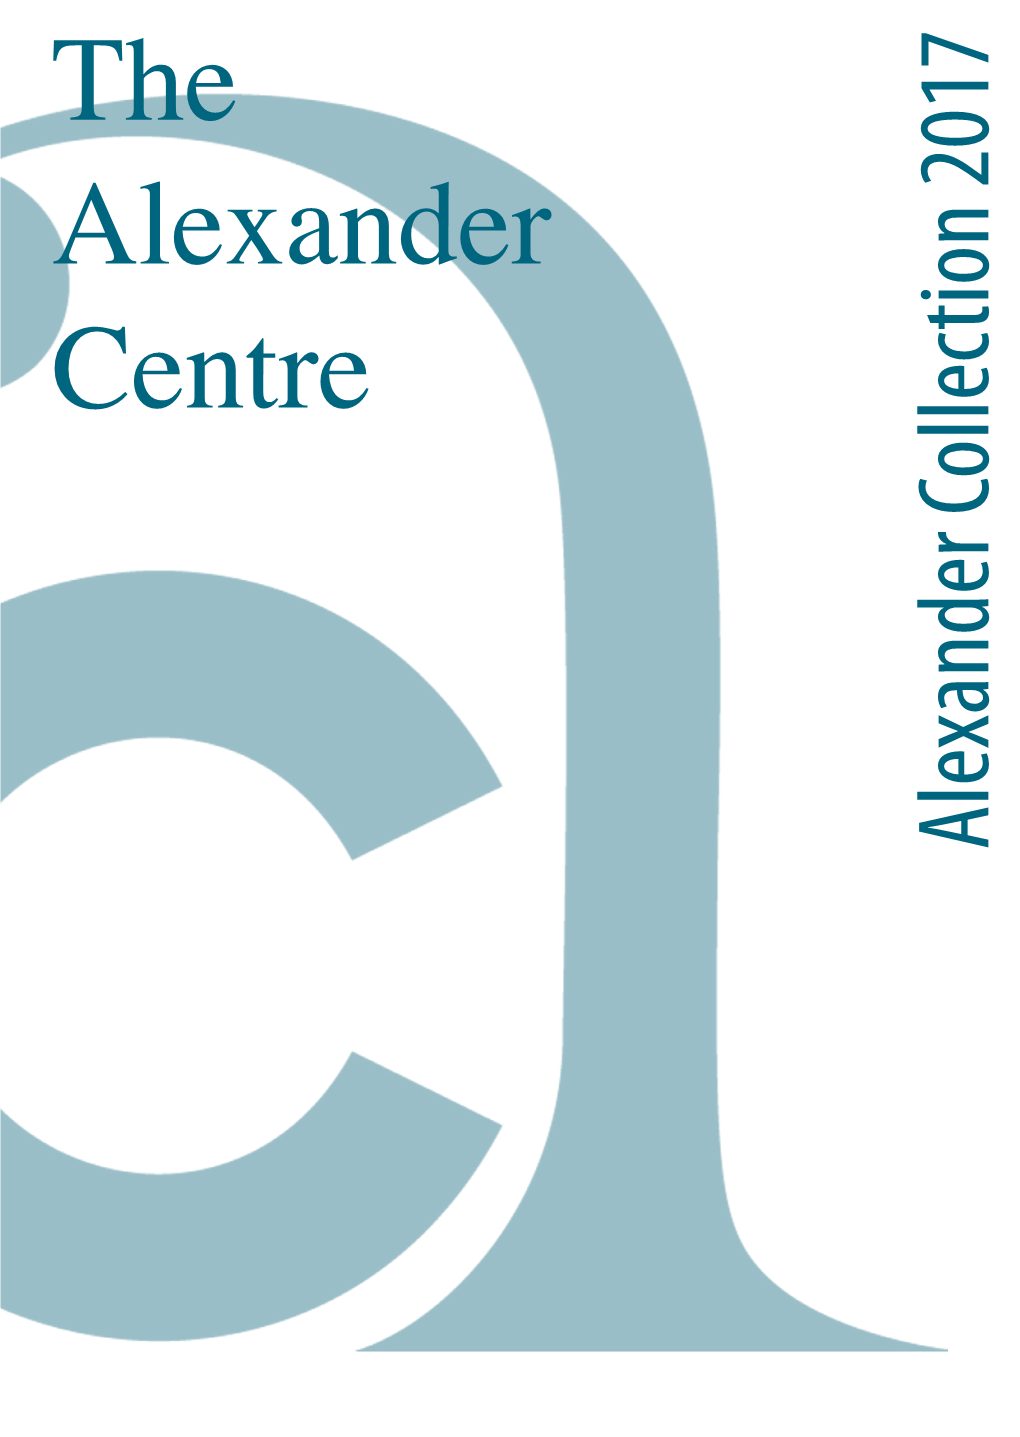 The Alexander Centre